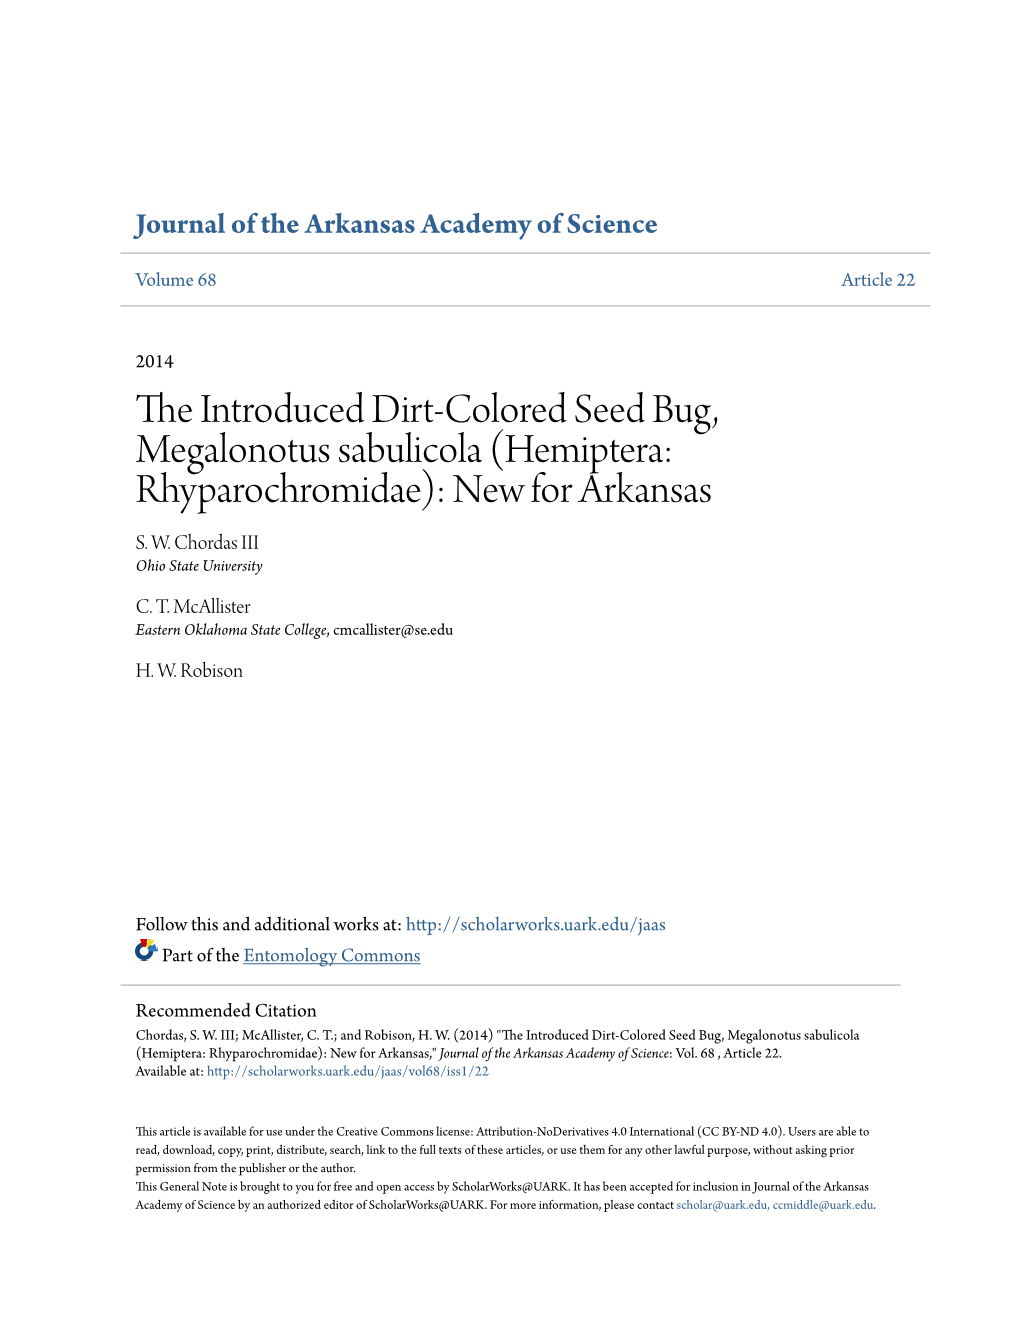 Hemiptera: Rhyparochromidae): New for Arkansas S